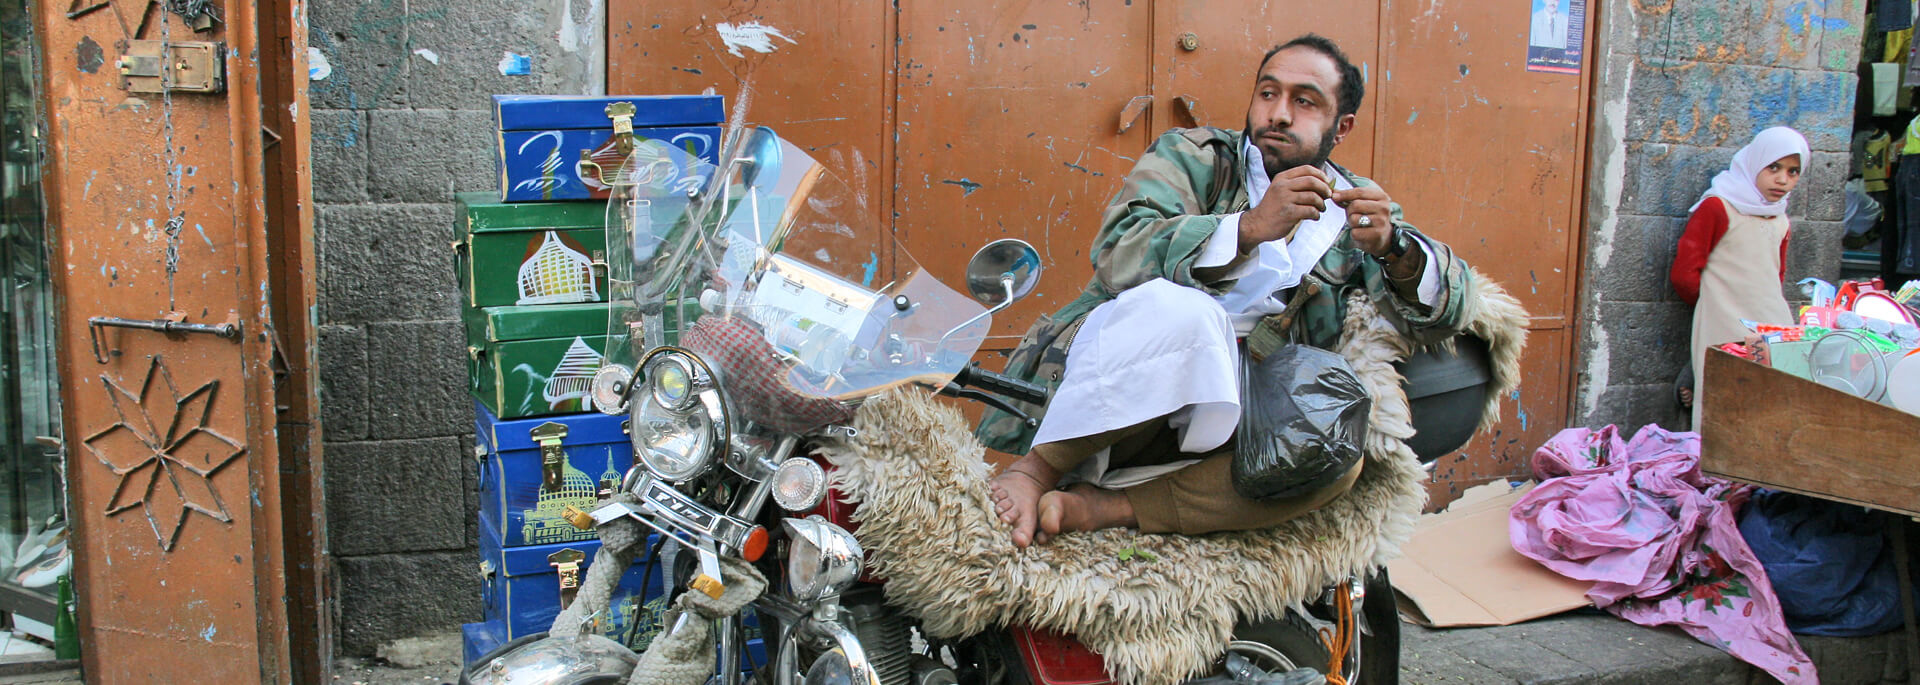 Fotos: Jemens Welterbe Sana'a